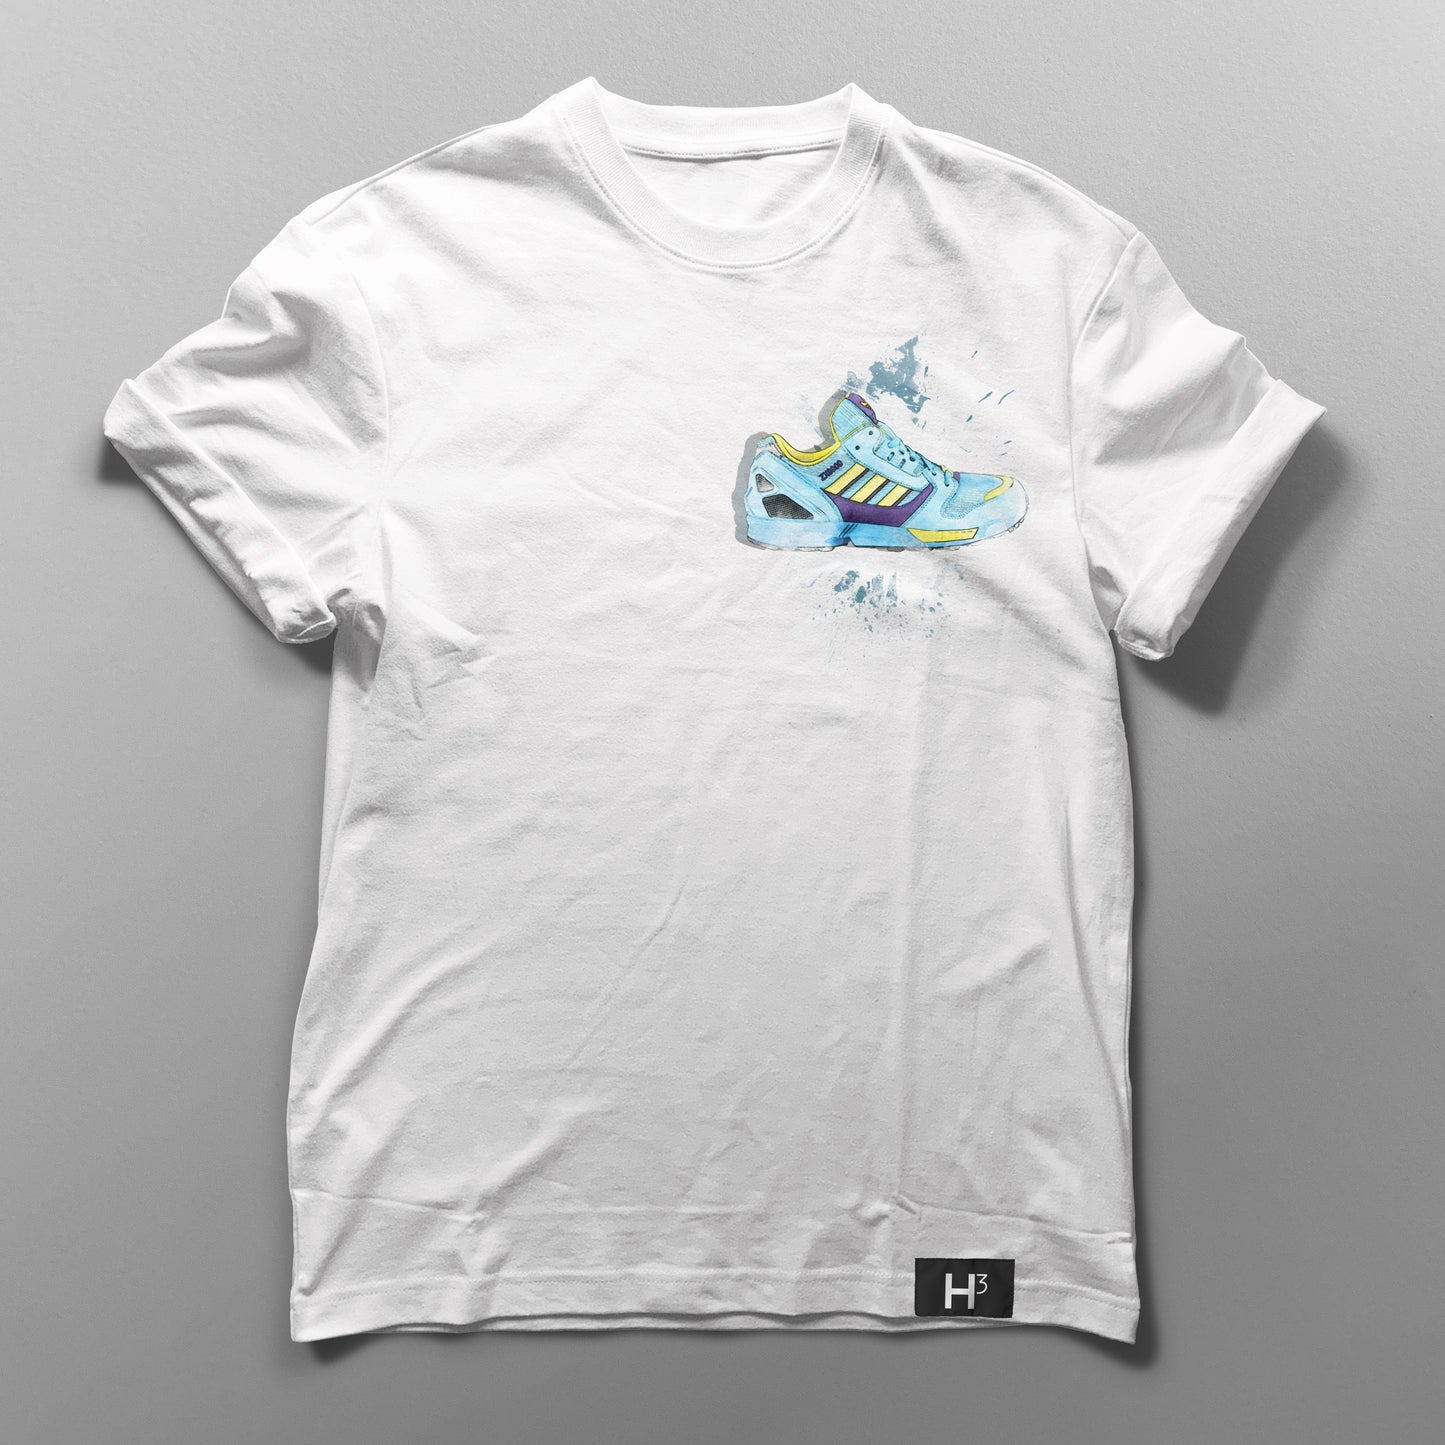 T-Shirt "Aqua" White - Small